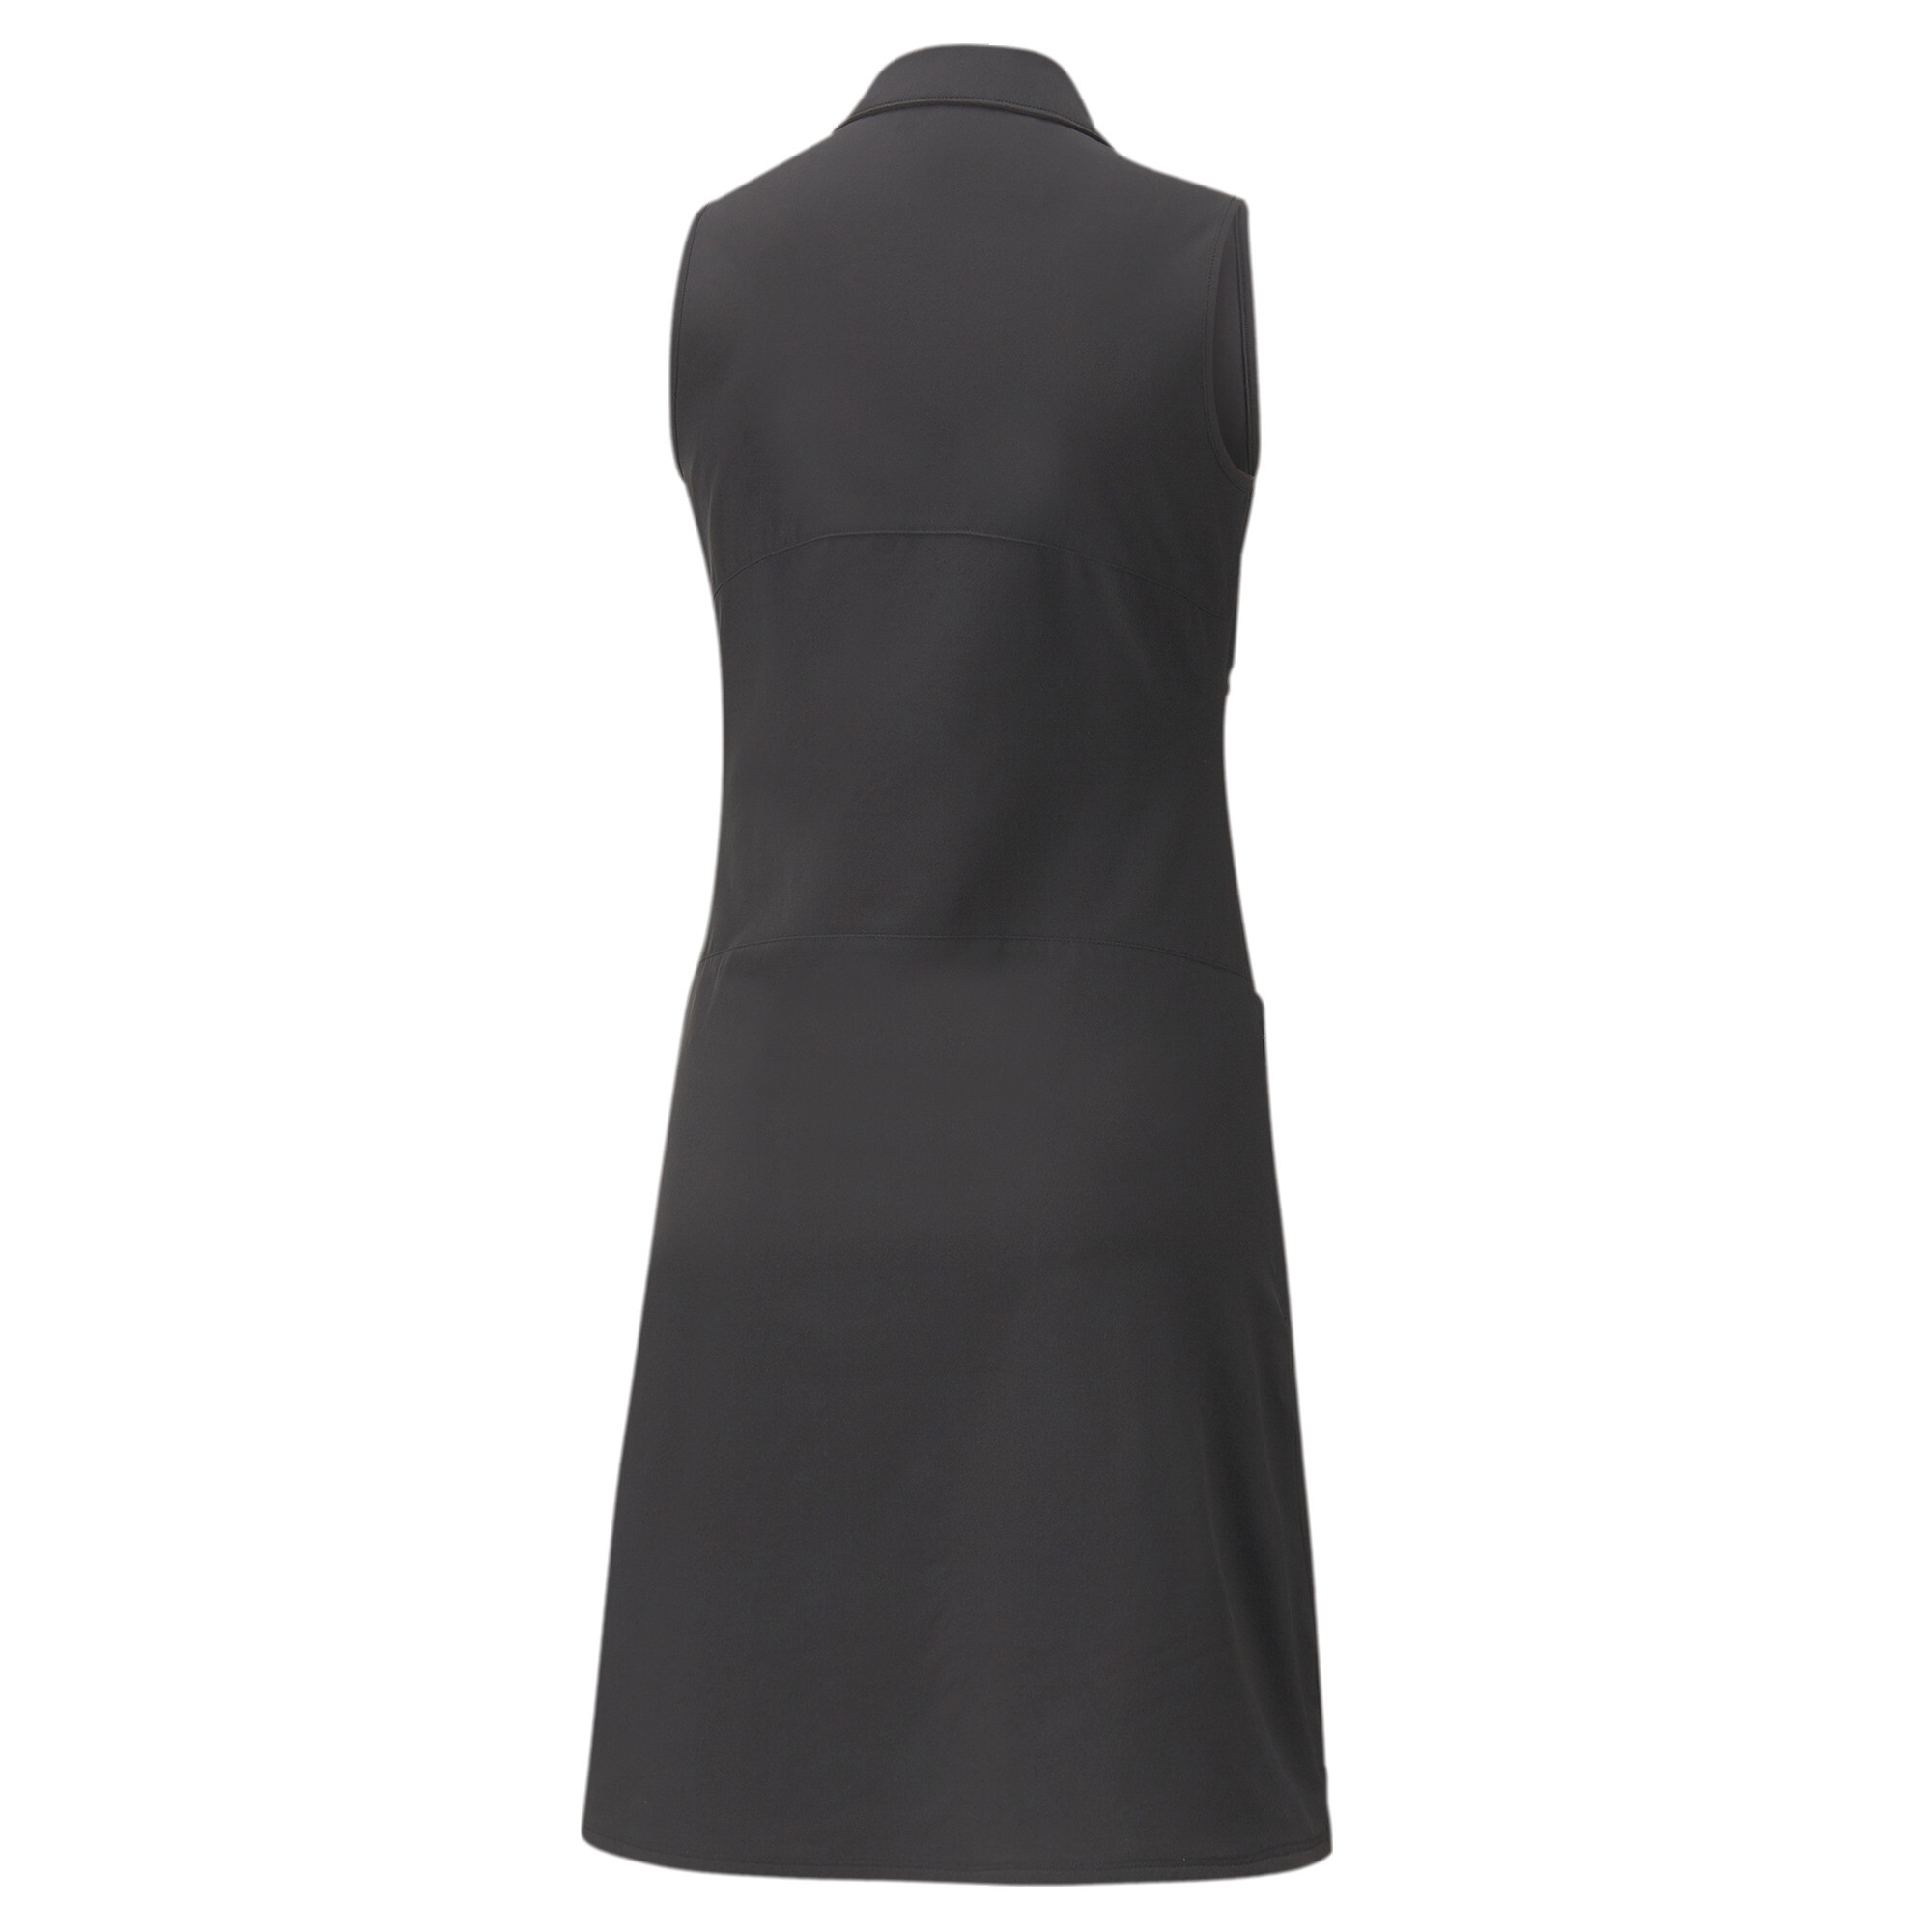 Women's Puma Cruise's Golf Dress, Black, Size S, Clothing